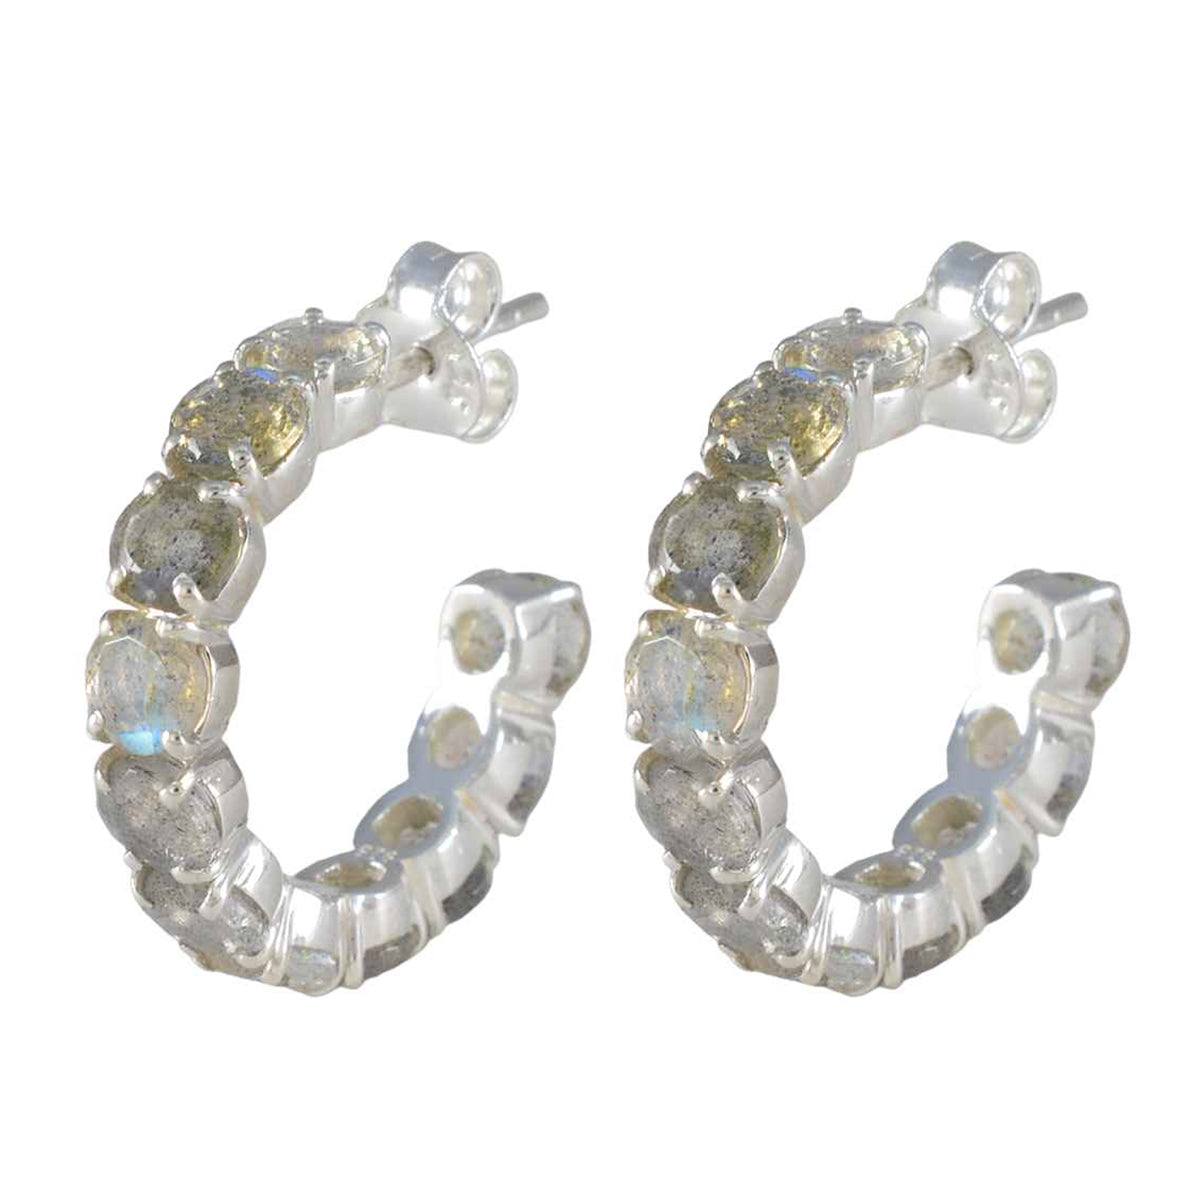 Riyo Comely Sterling Silber Ohrring für Demoiselle Labradorit Ohrring Lünette Fassung Multi Ohrring Ohrstecker